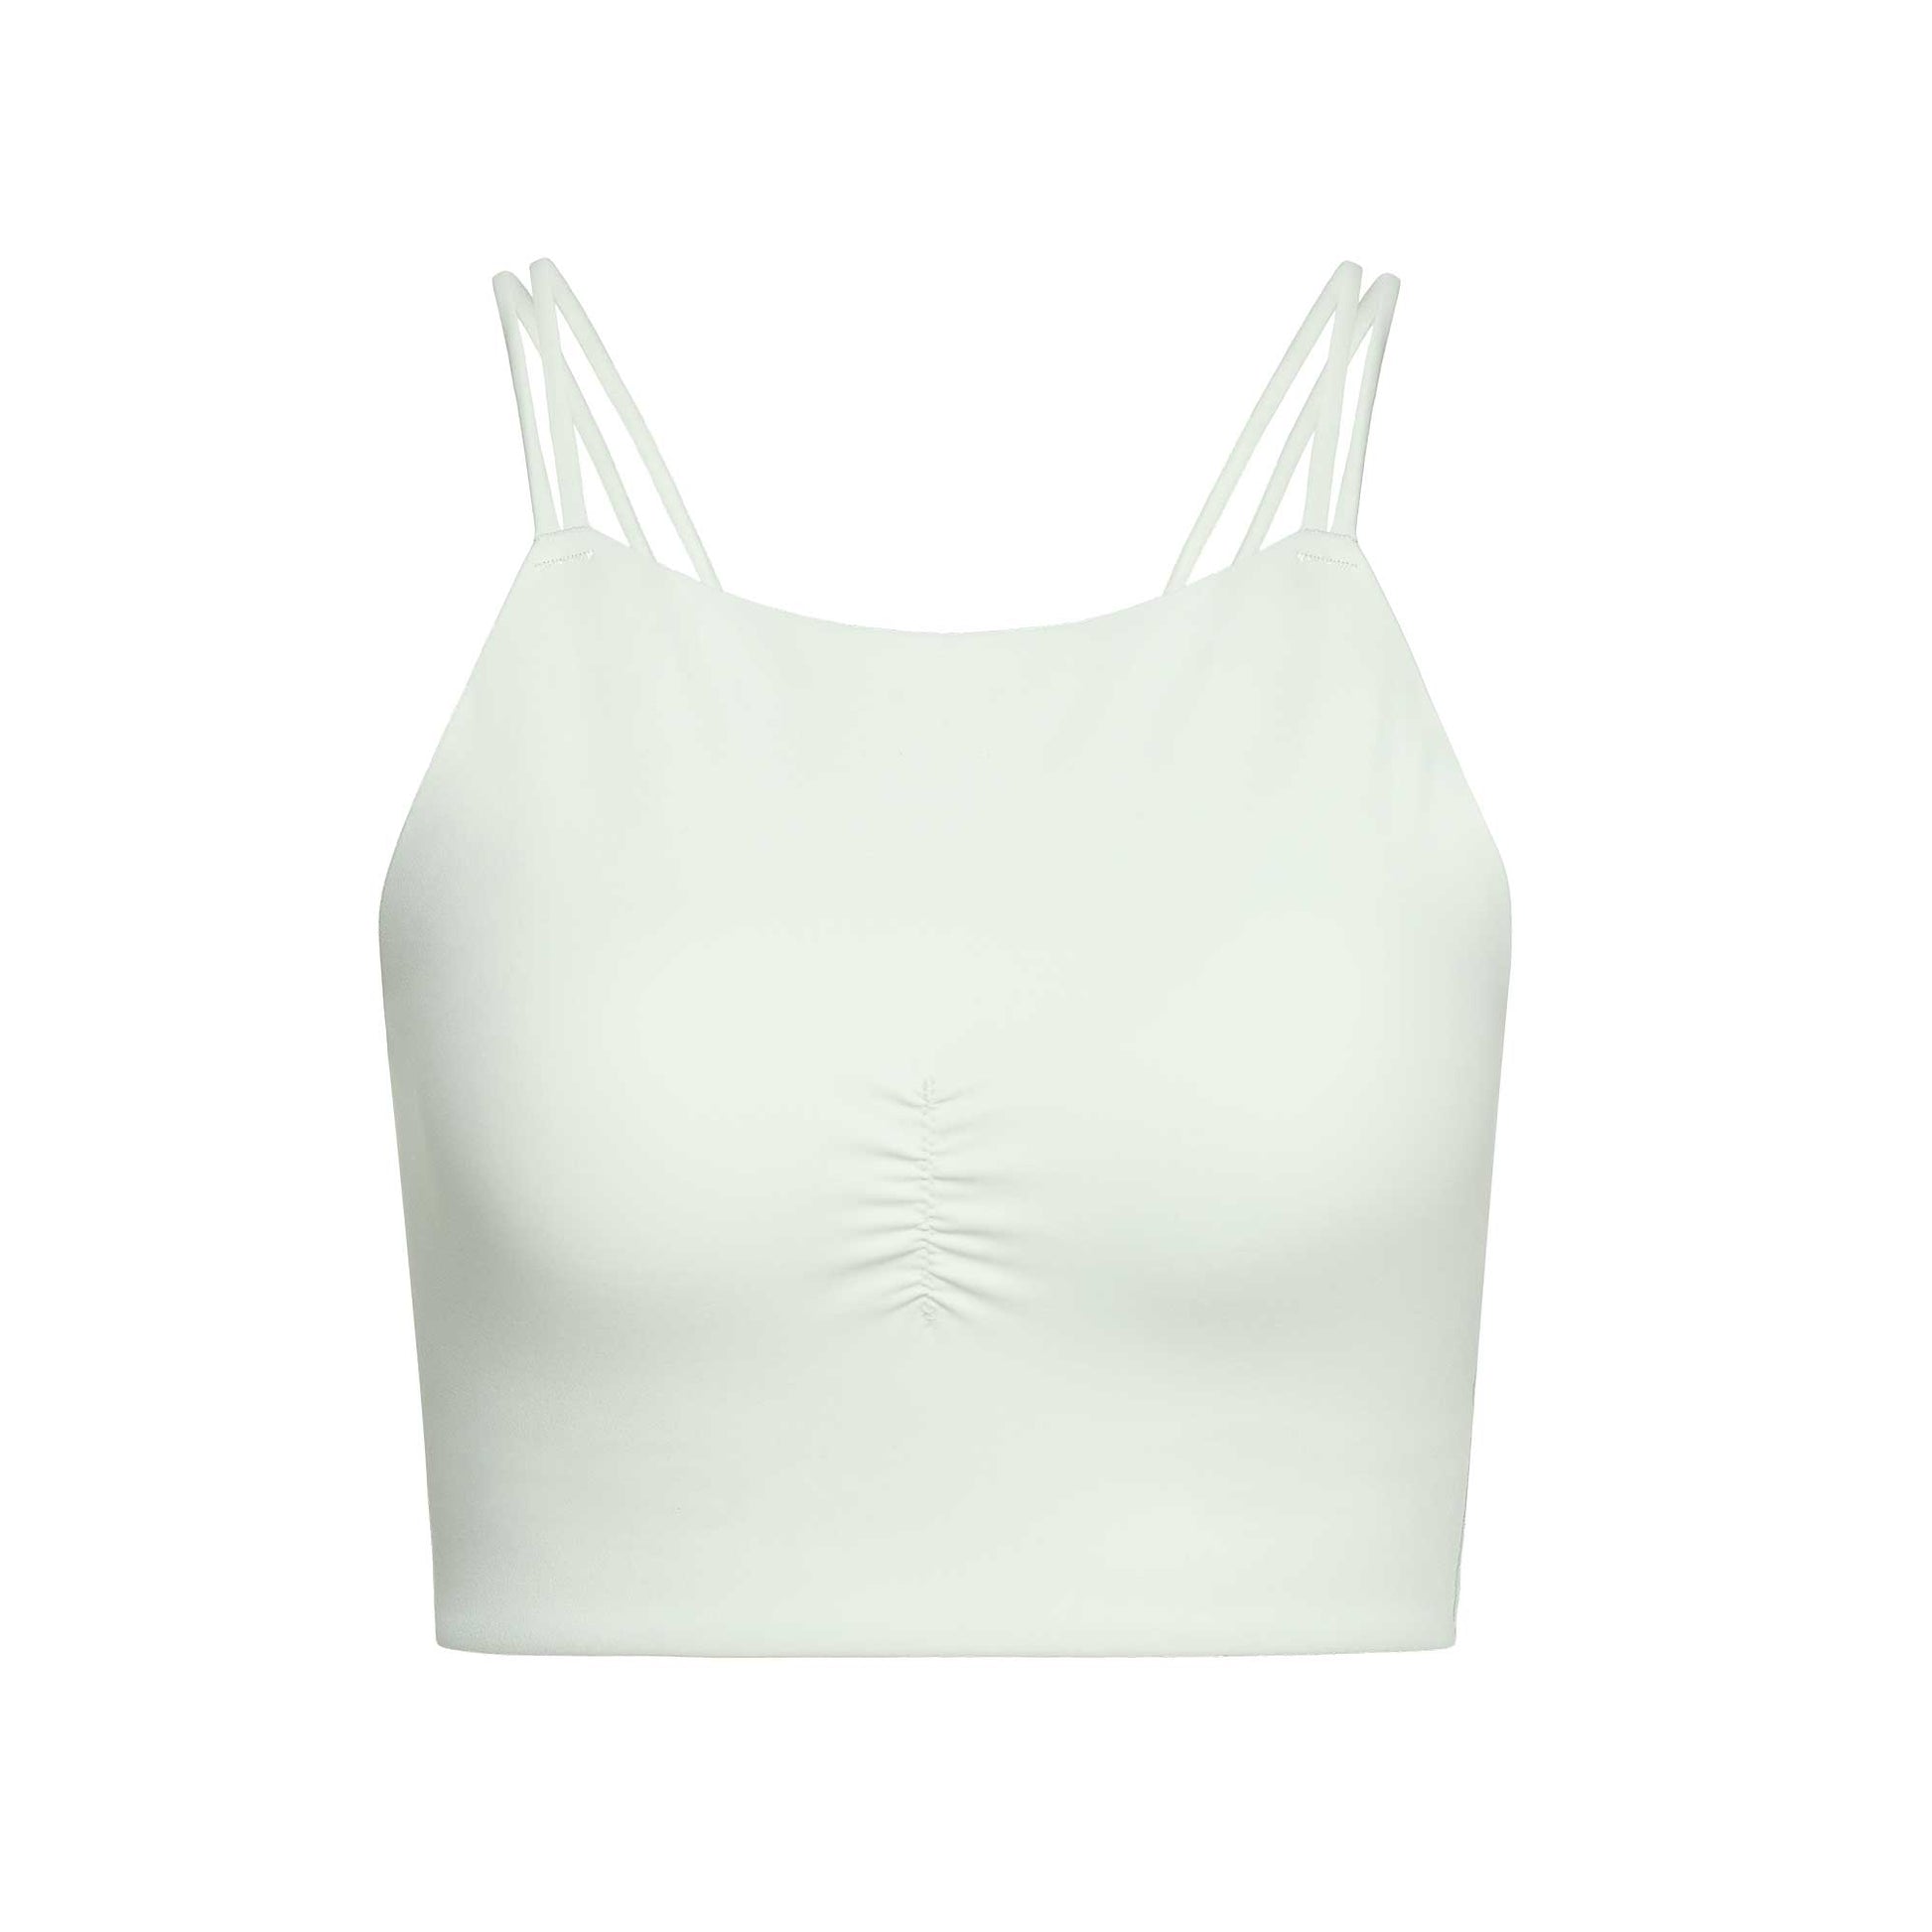 flat lay of white sports bra